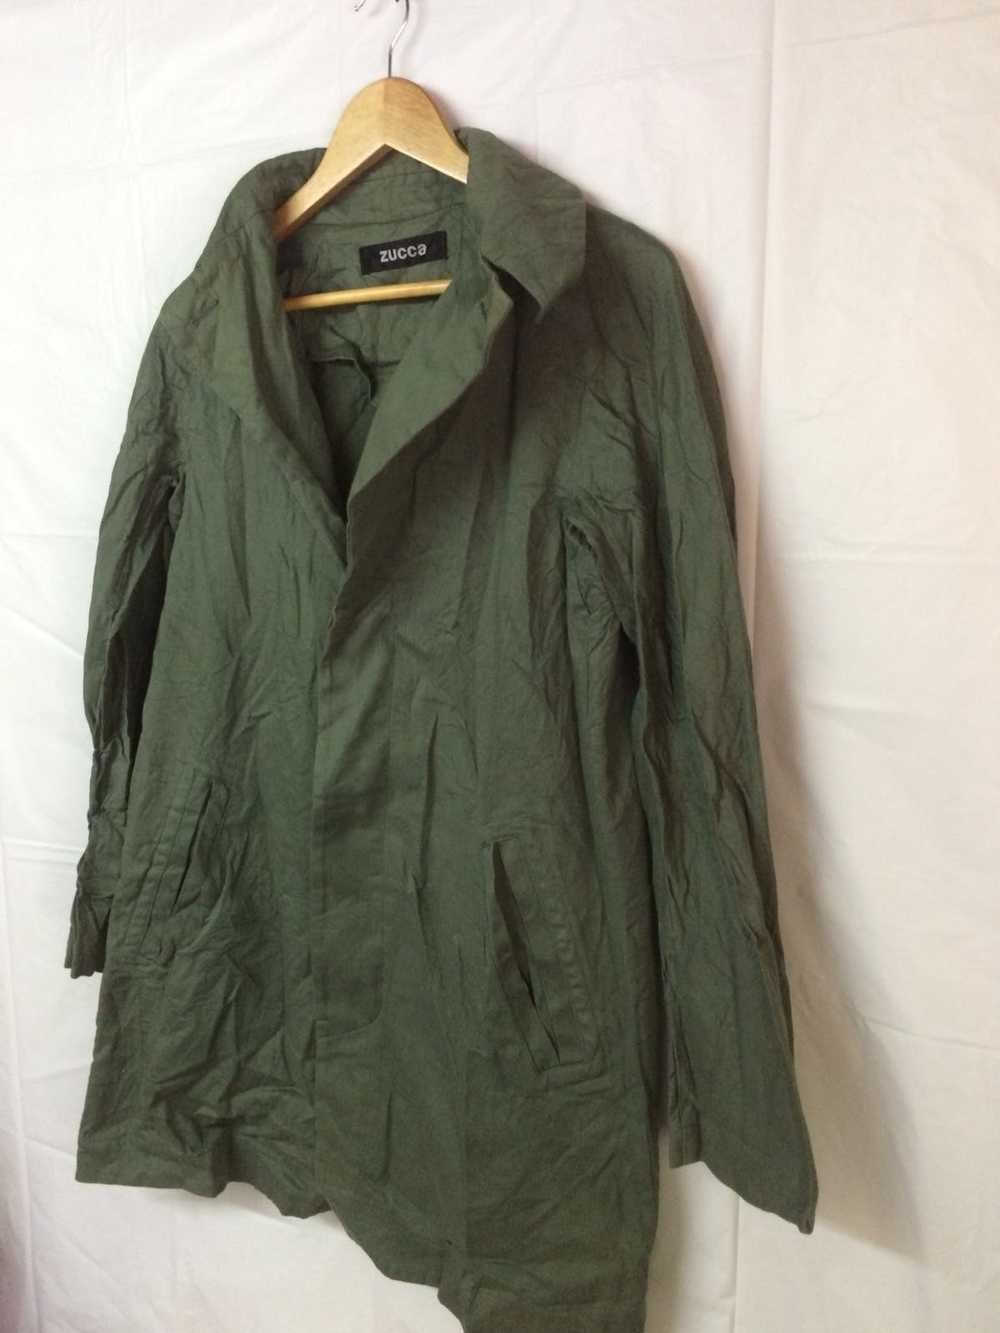 Japanese Brand Rare Vintage 80s Zucca jacket - image 3